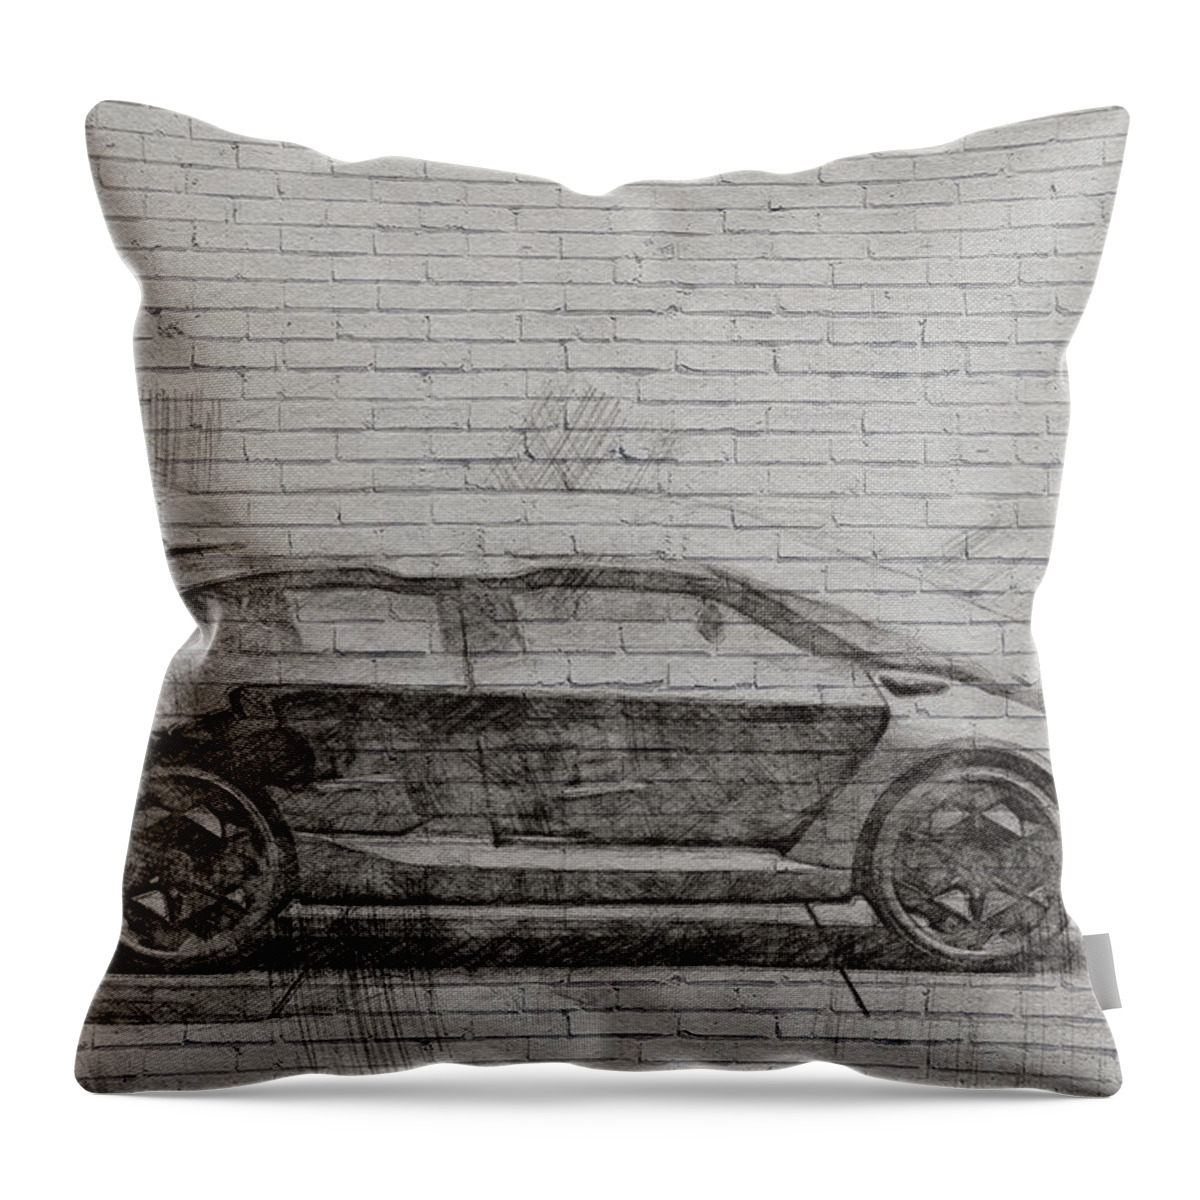 Car Throw Pillow featuring the digital art Vehicle 102 GAC Entranze 2019 by Edgar Dorice